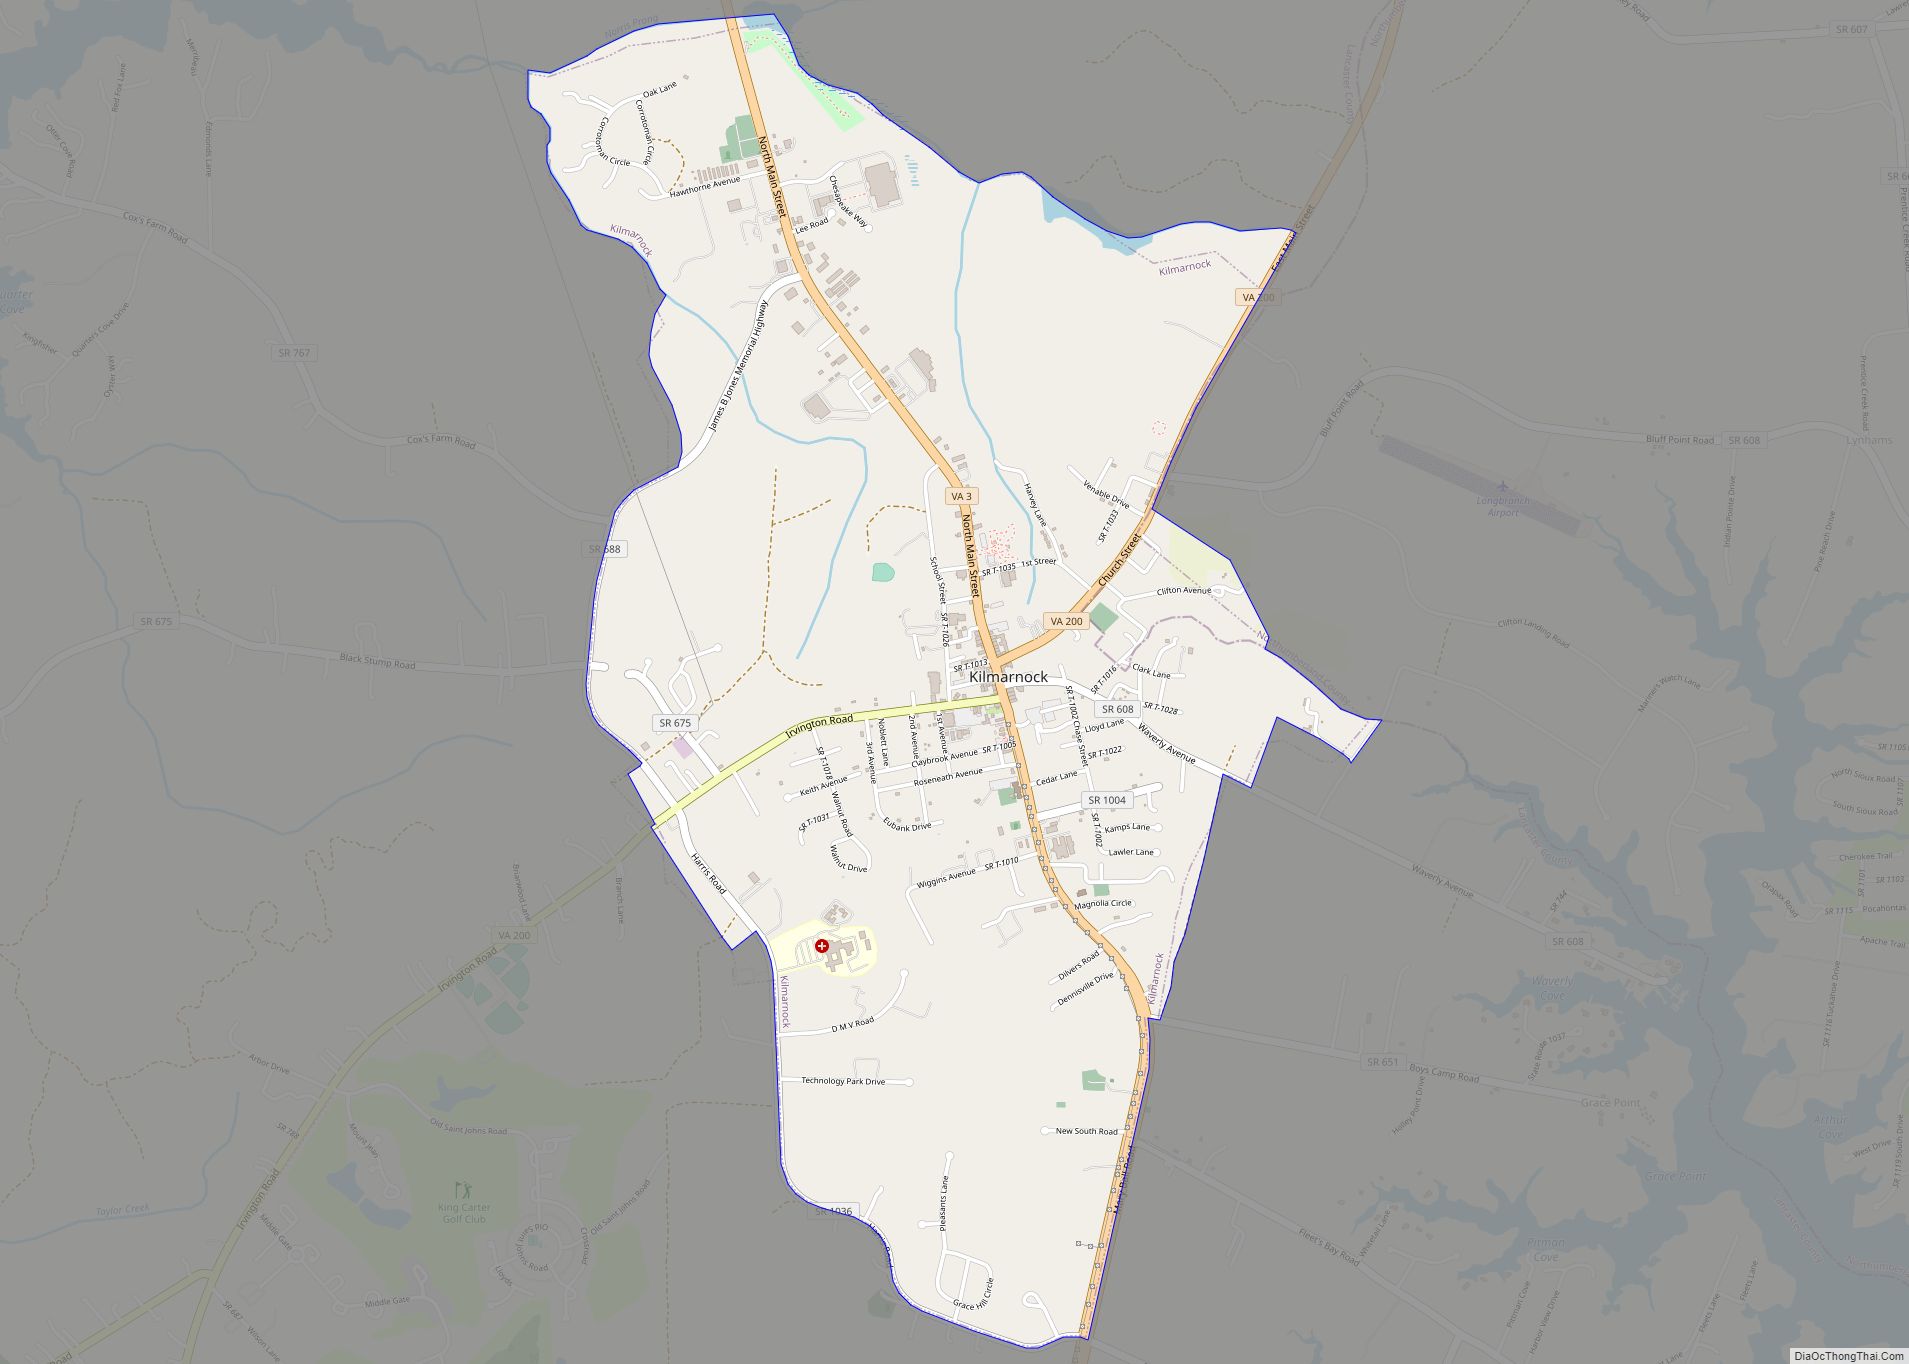 Map of Kilmarnock town